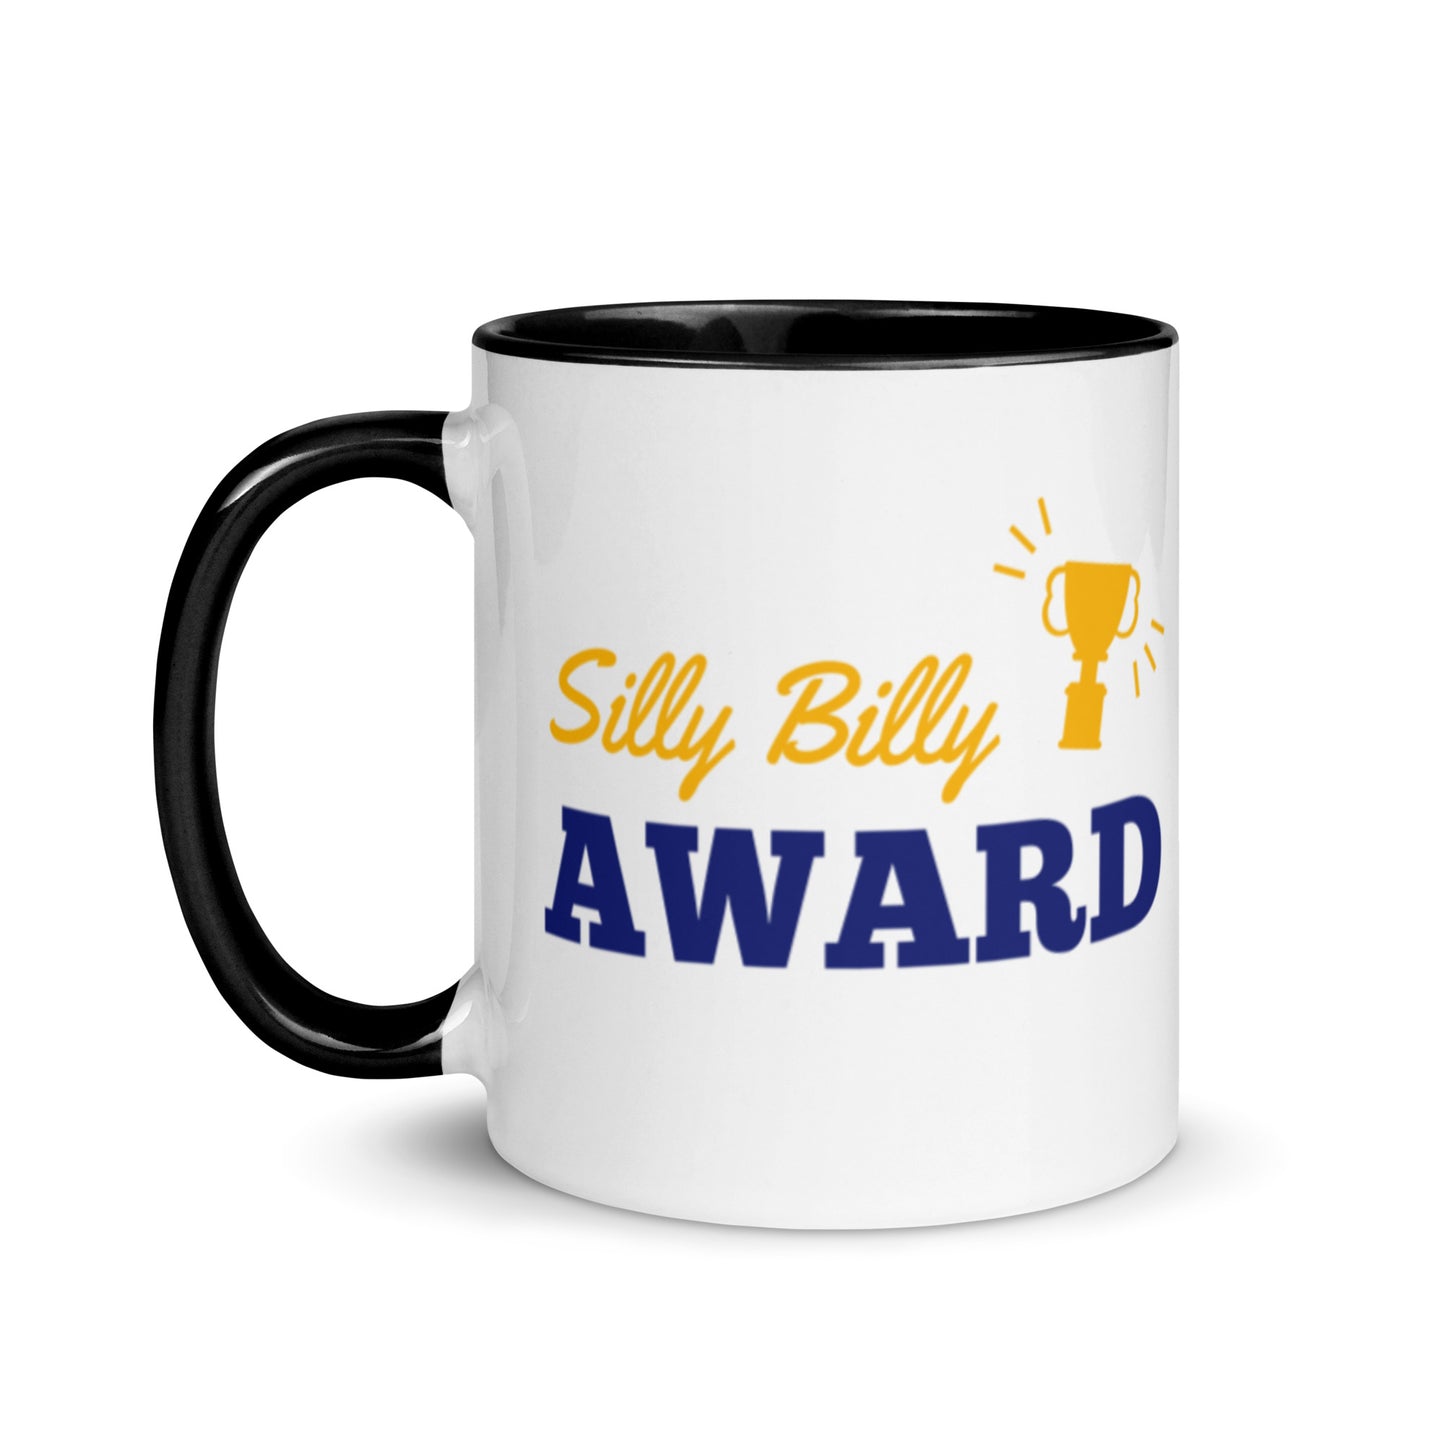 Silly Billy Award Comedy Quote Mug